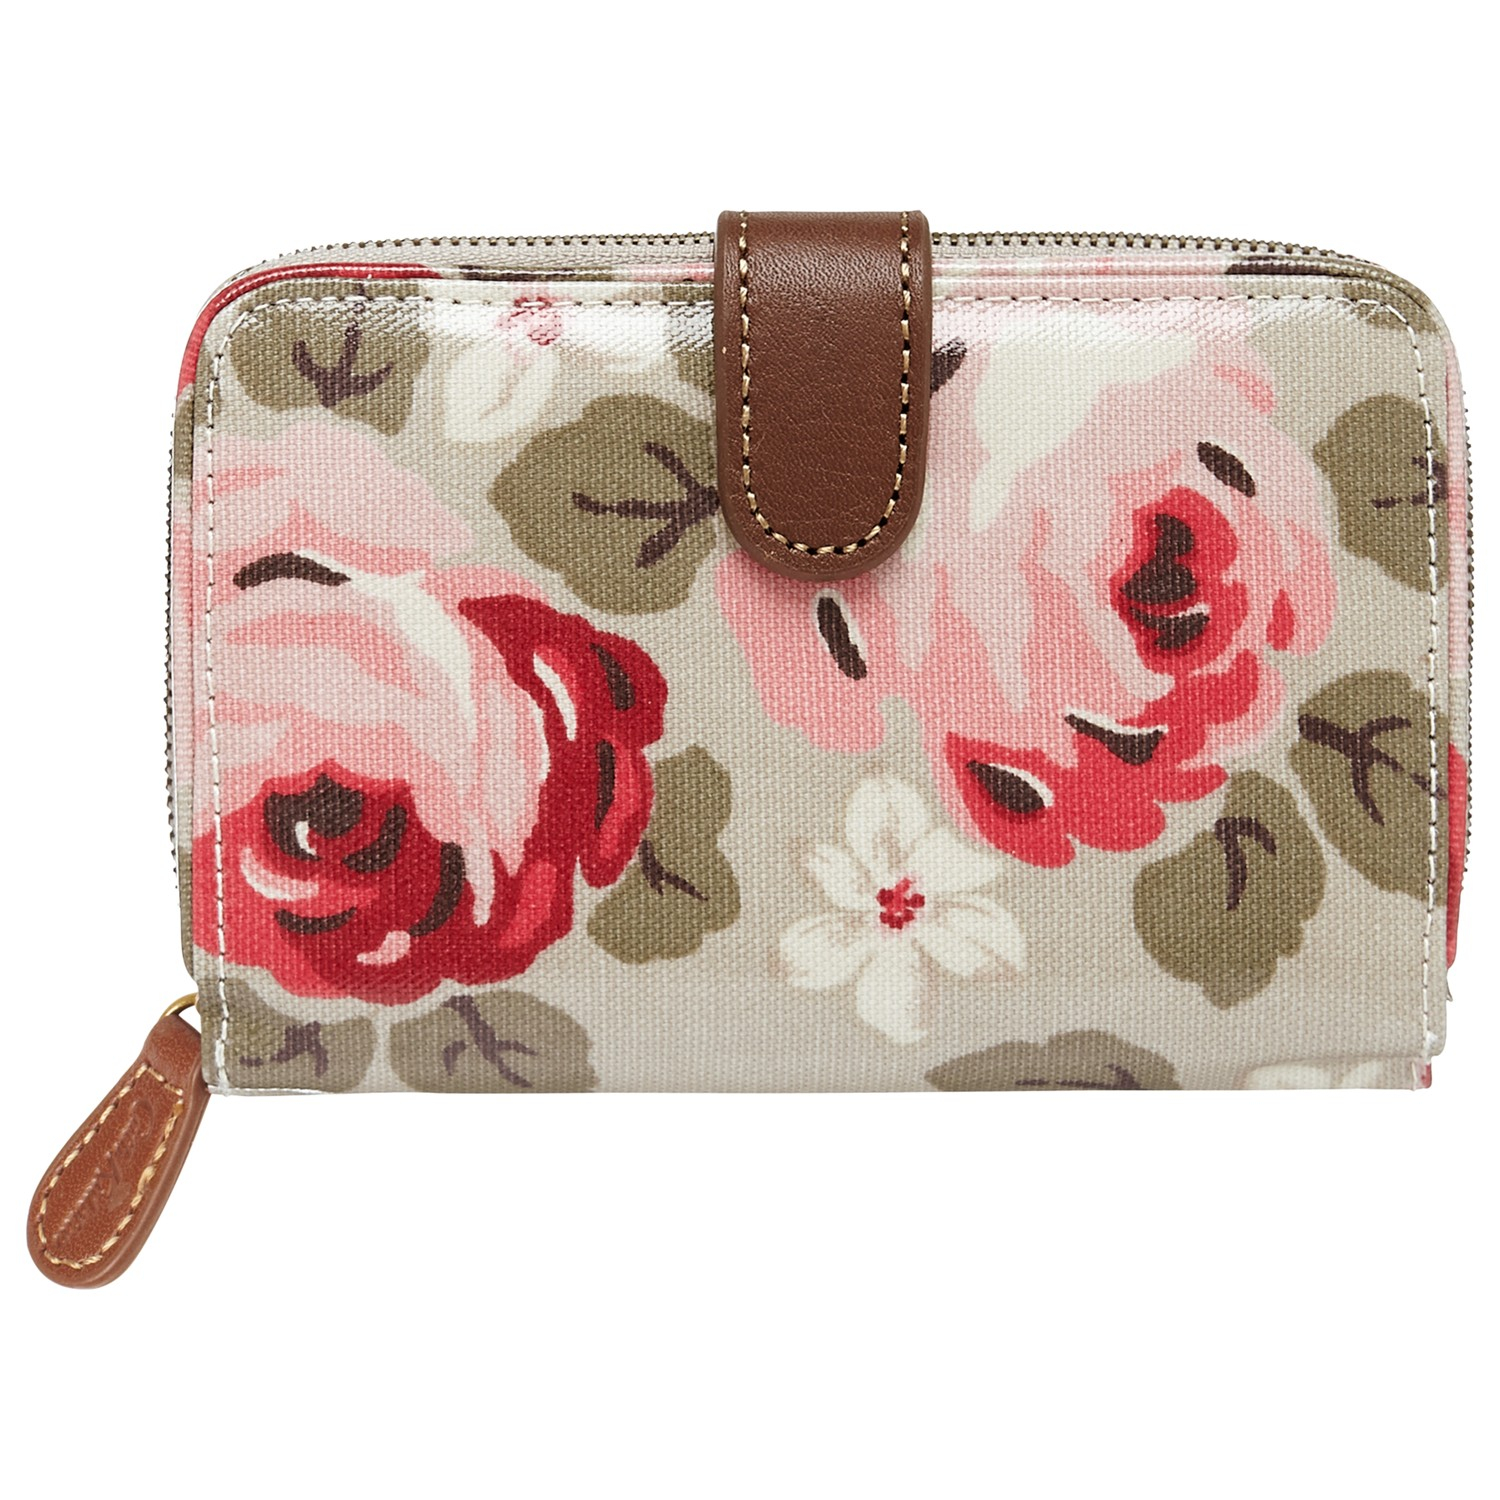 cath kidston floral purse